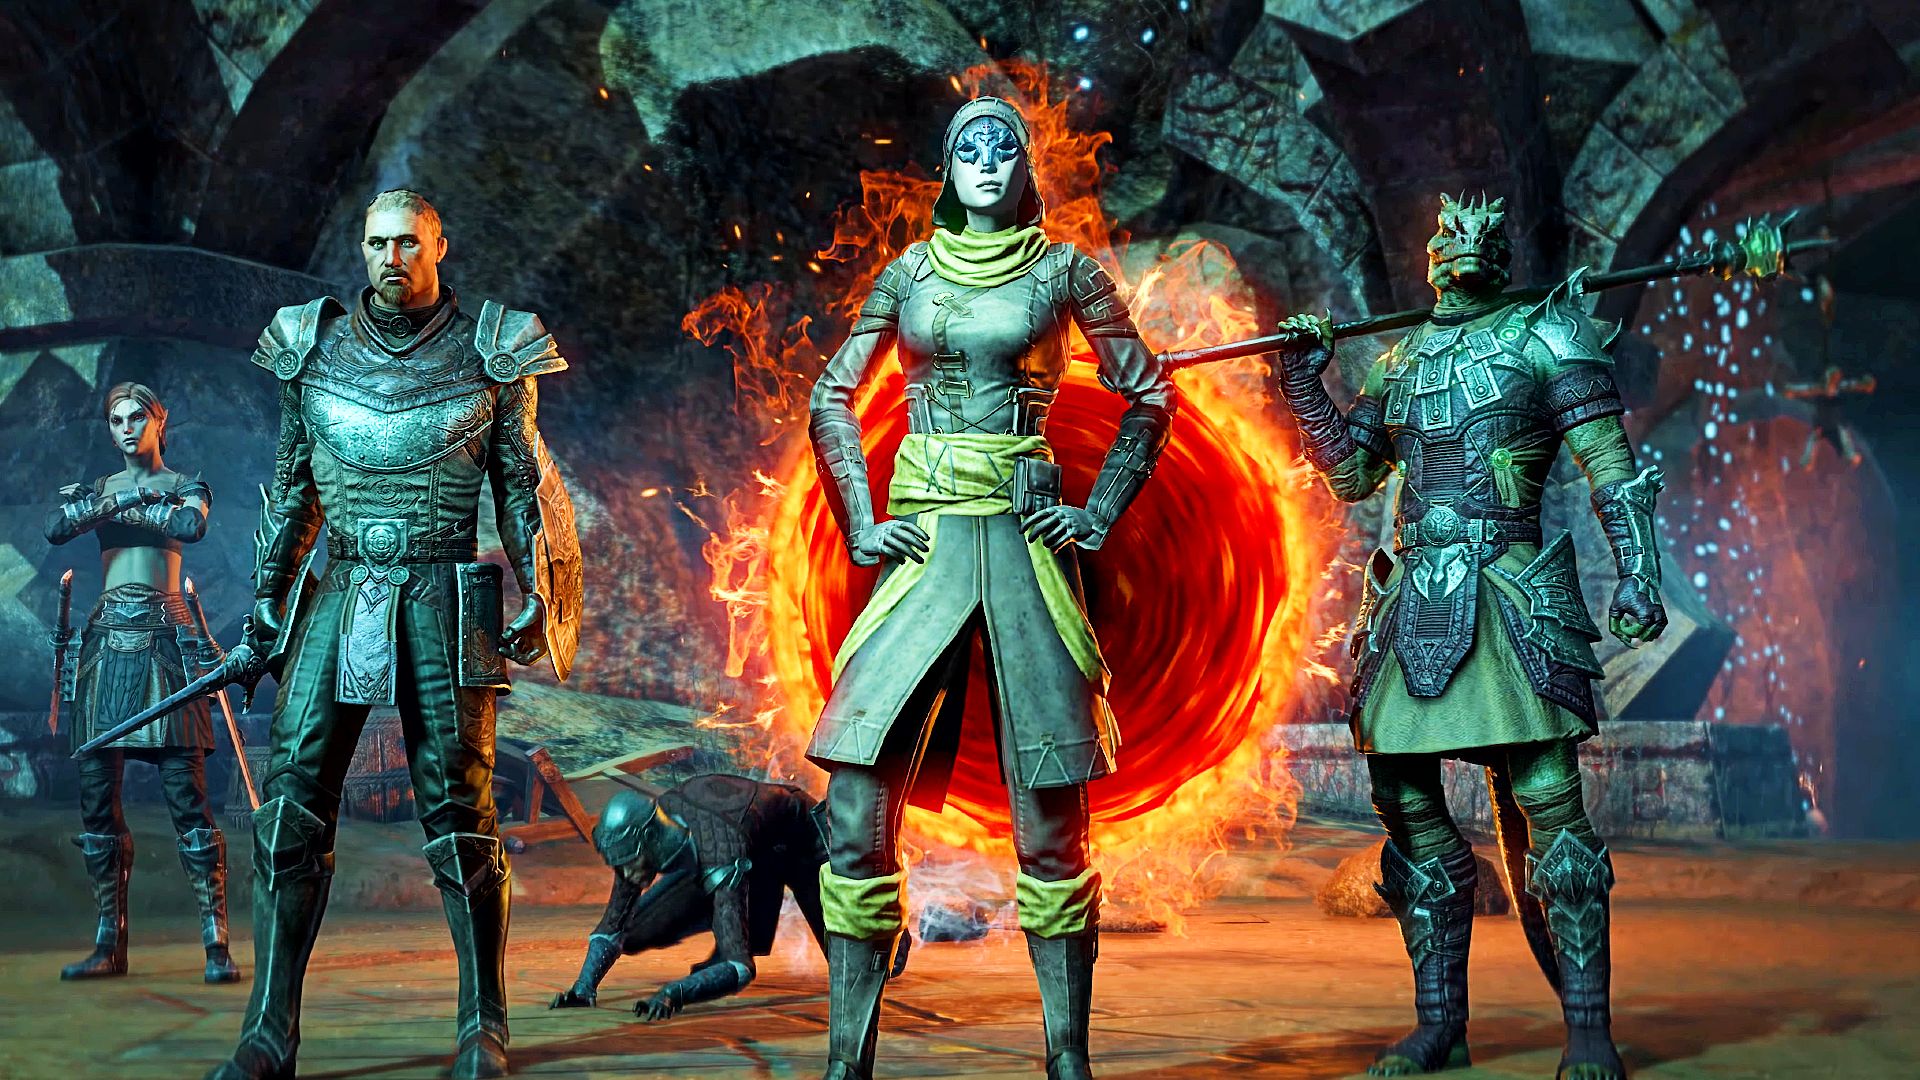 Bethesda Tours Upcoming DLC for The Elder Scrolls Online: Tamriel Unlimited